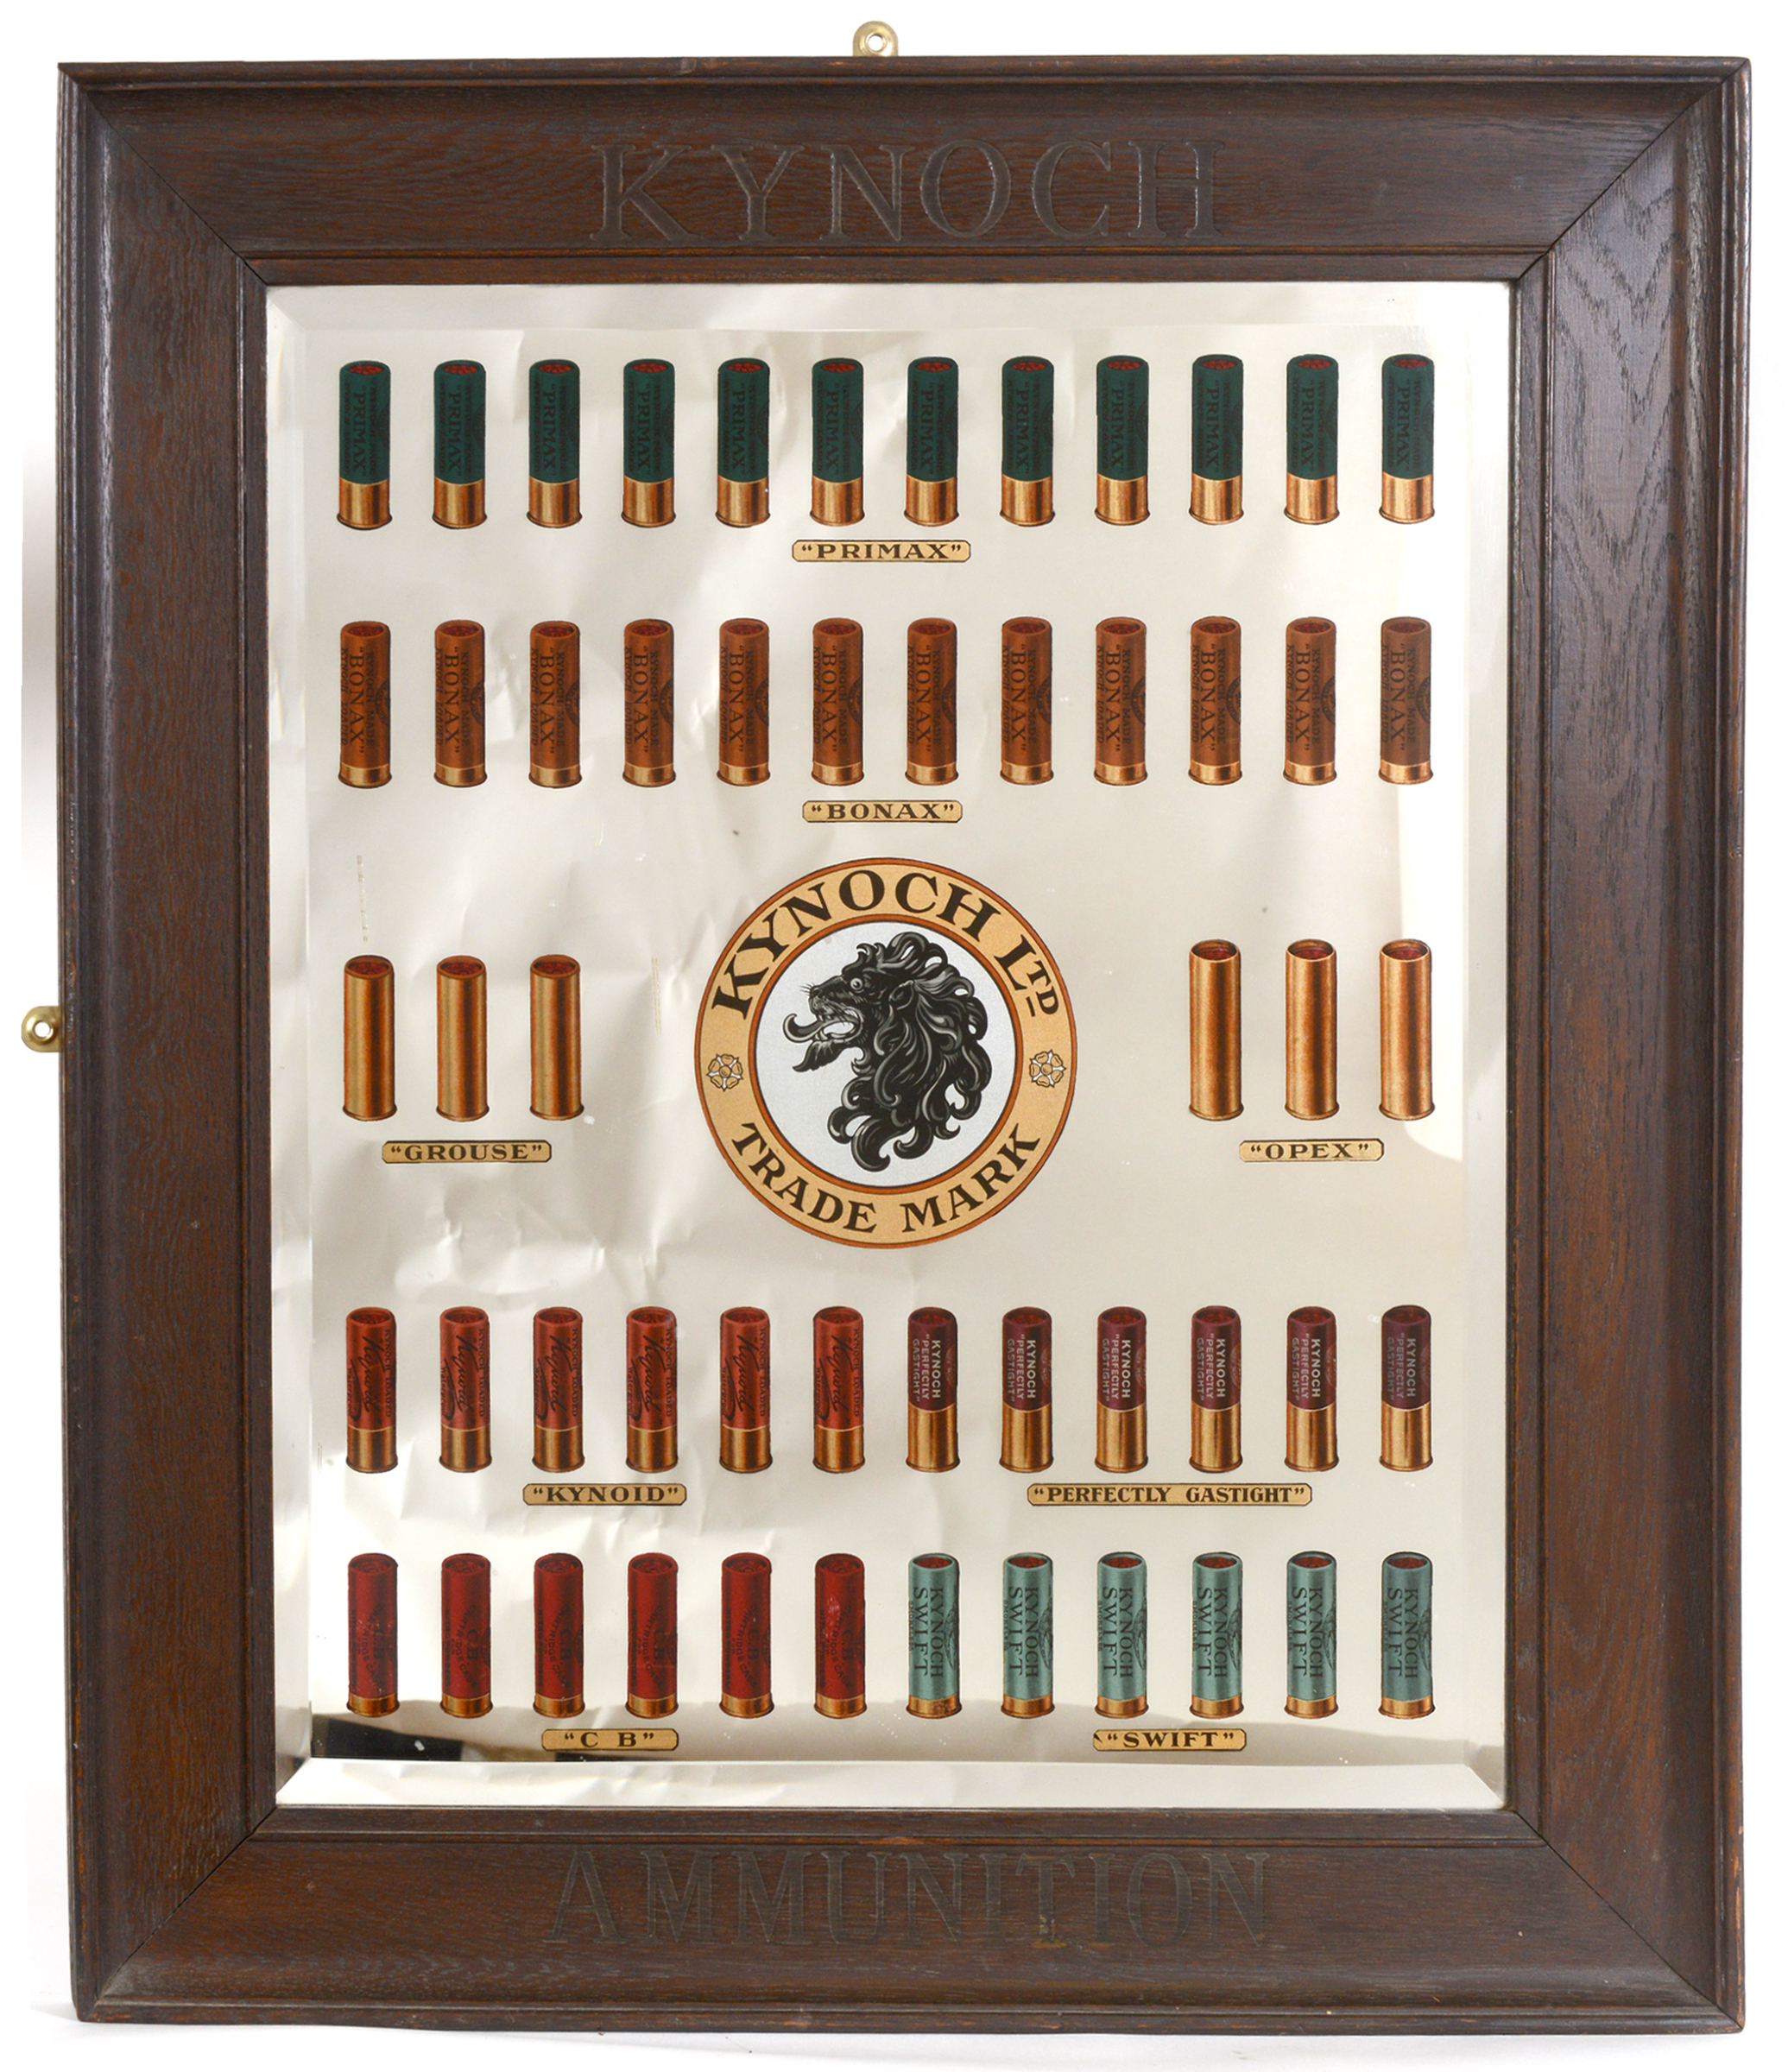 An early 20th century Kynoch shotgun cartridge display mirror, comprising an arrangement of Kynoch